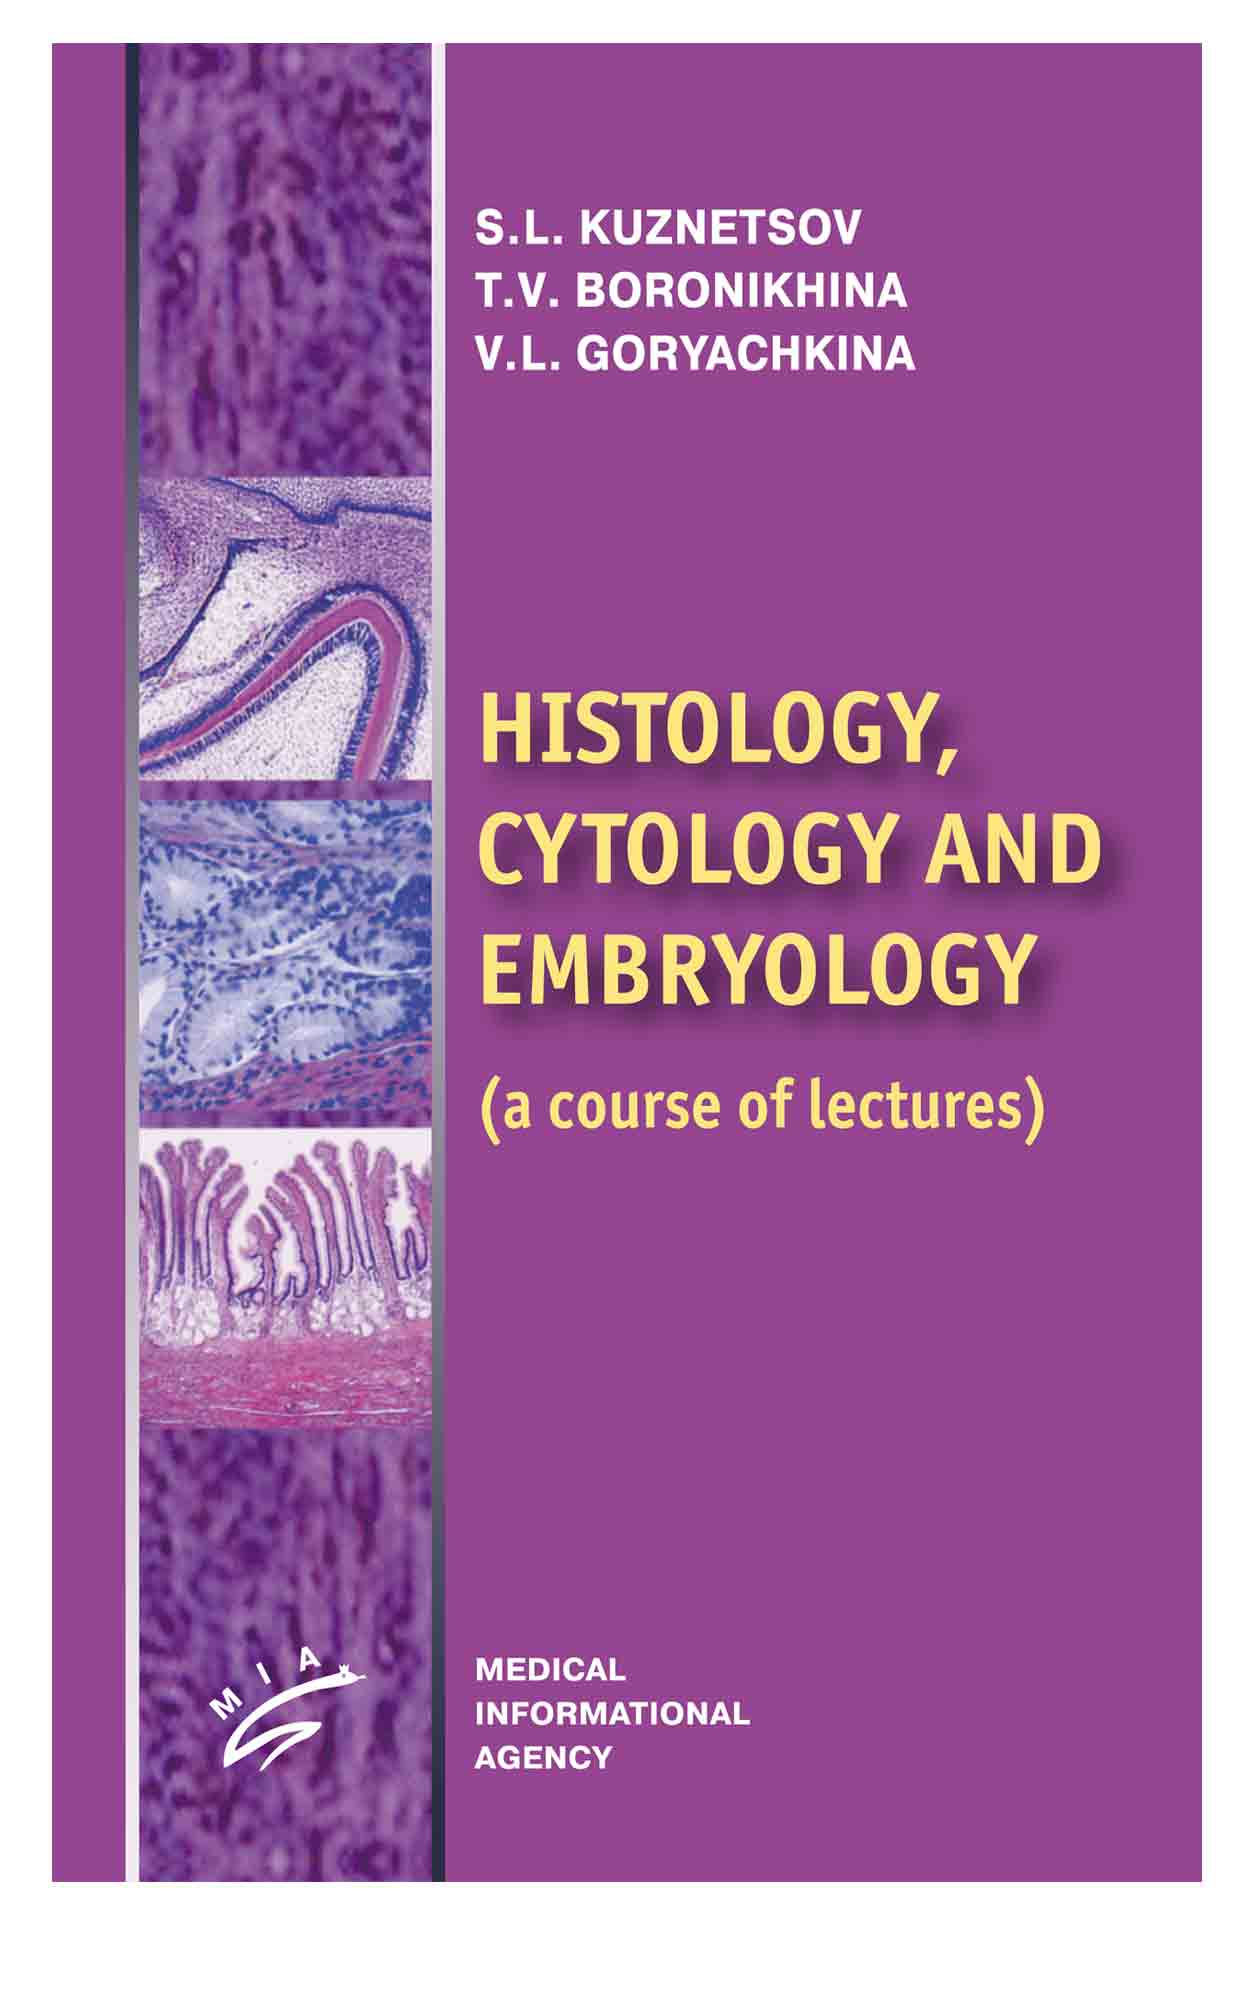 Boronikhina T.V., Goryachkina V.L., Kuznetsov S.L. Histology, Cytology and Embriology (a course of lectures) 